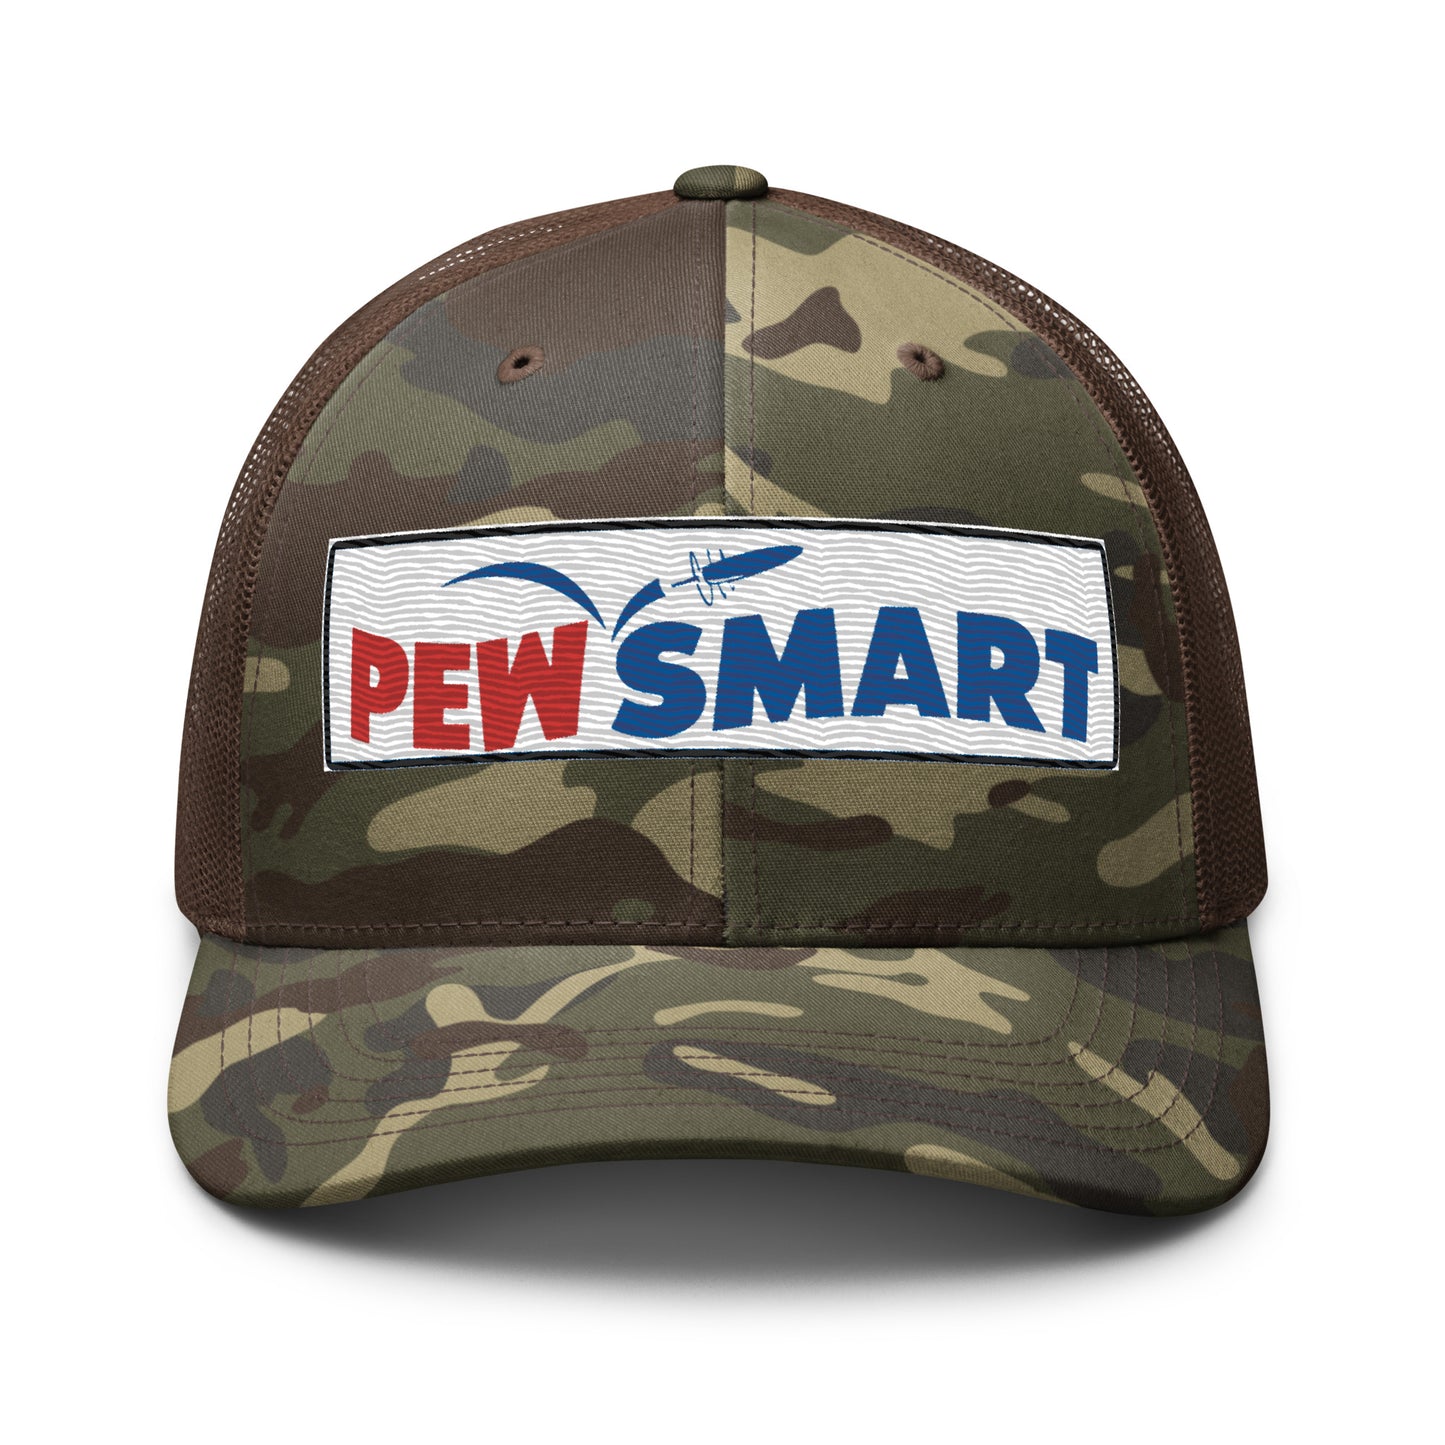 PewSmart Camouflage trucker hat